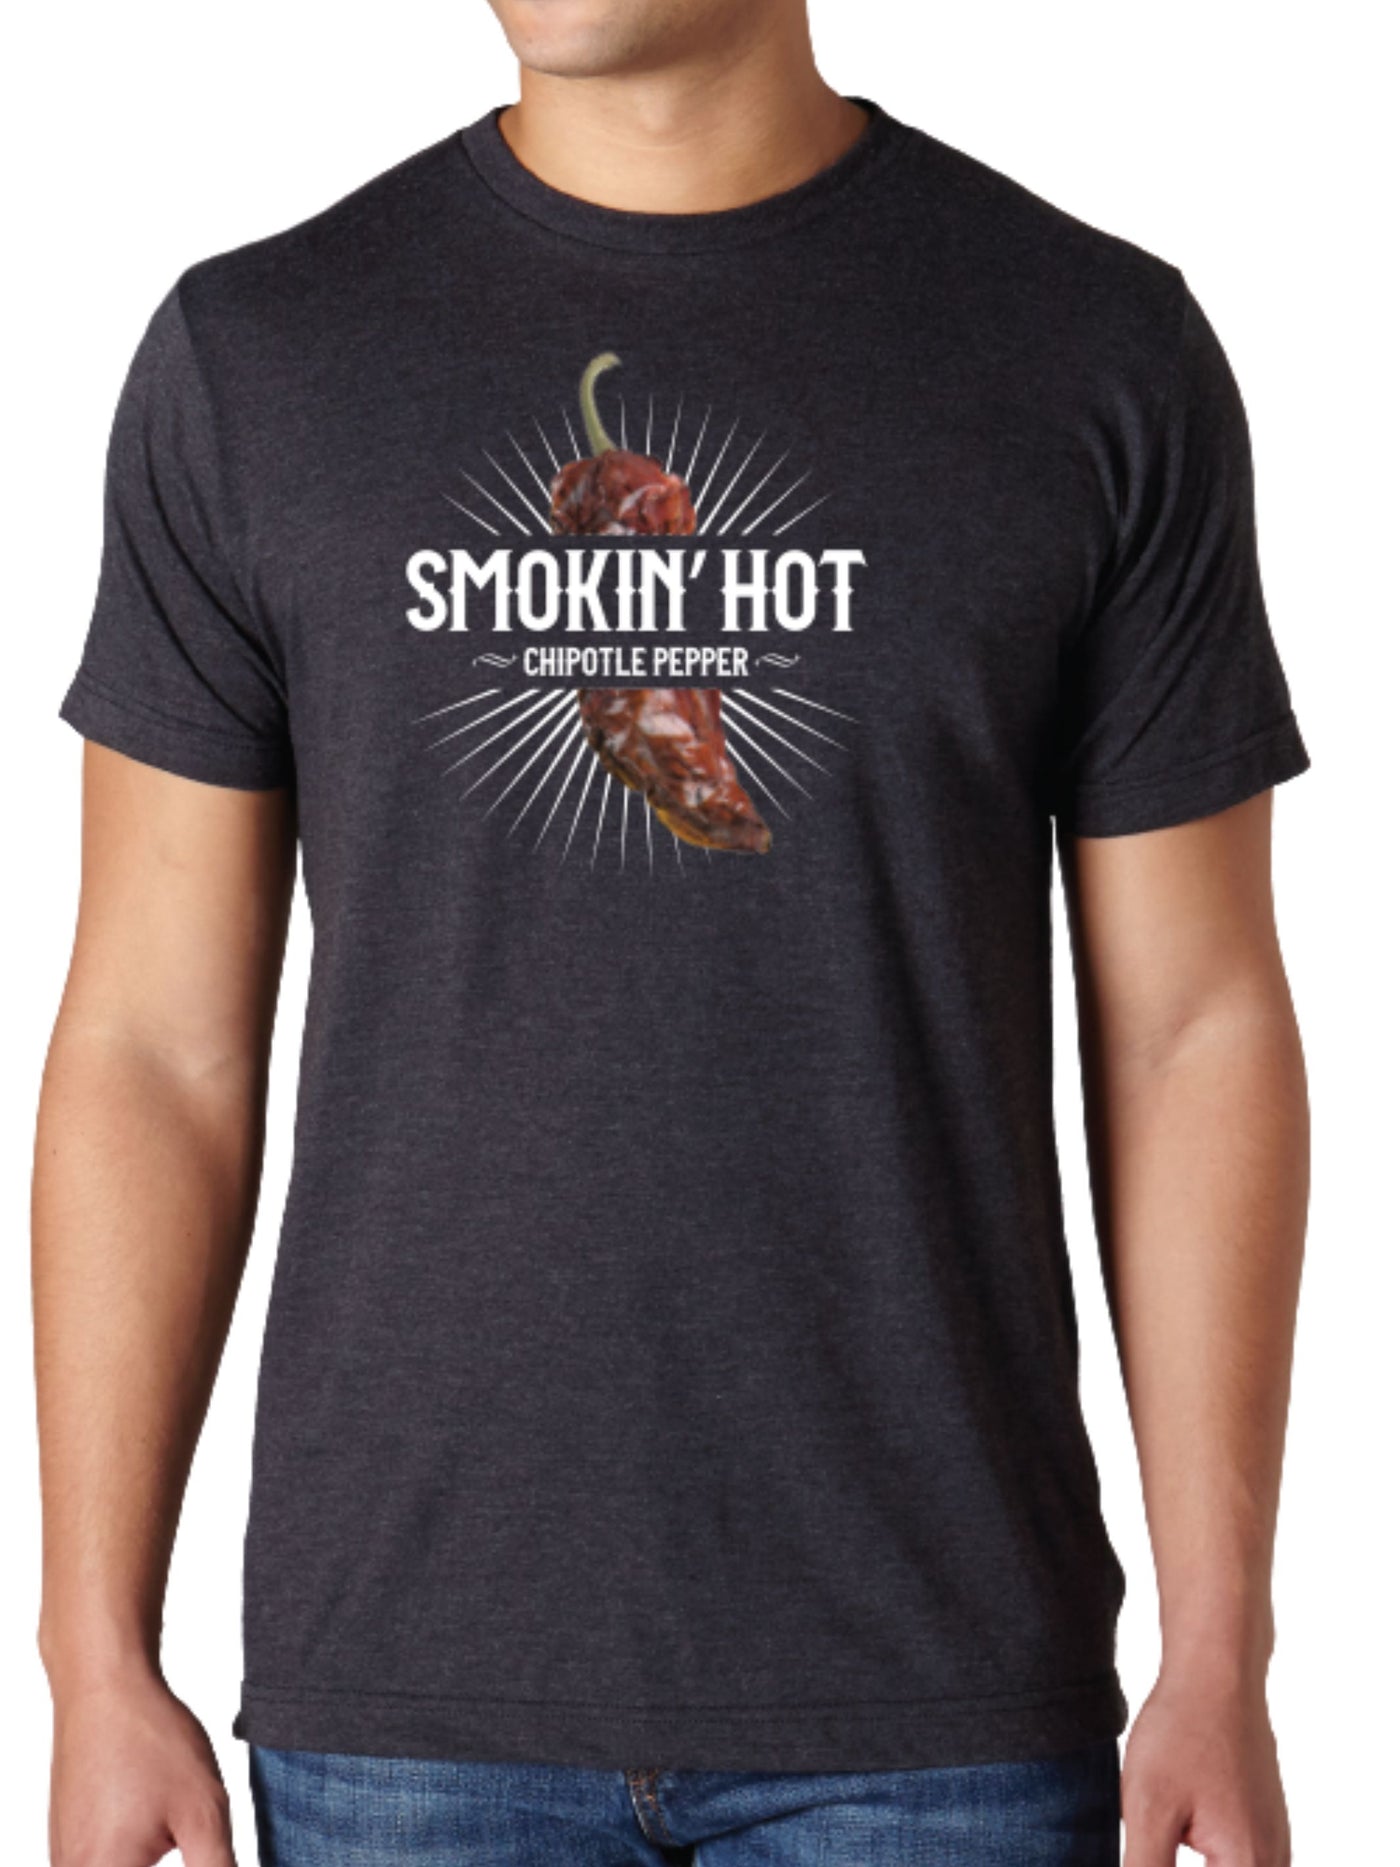 Smokin' Hot Chipotle Pepper T-Shirt from Louisiana Pepper Exchange